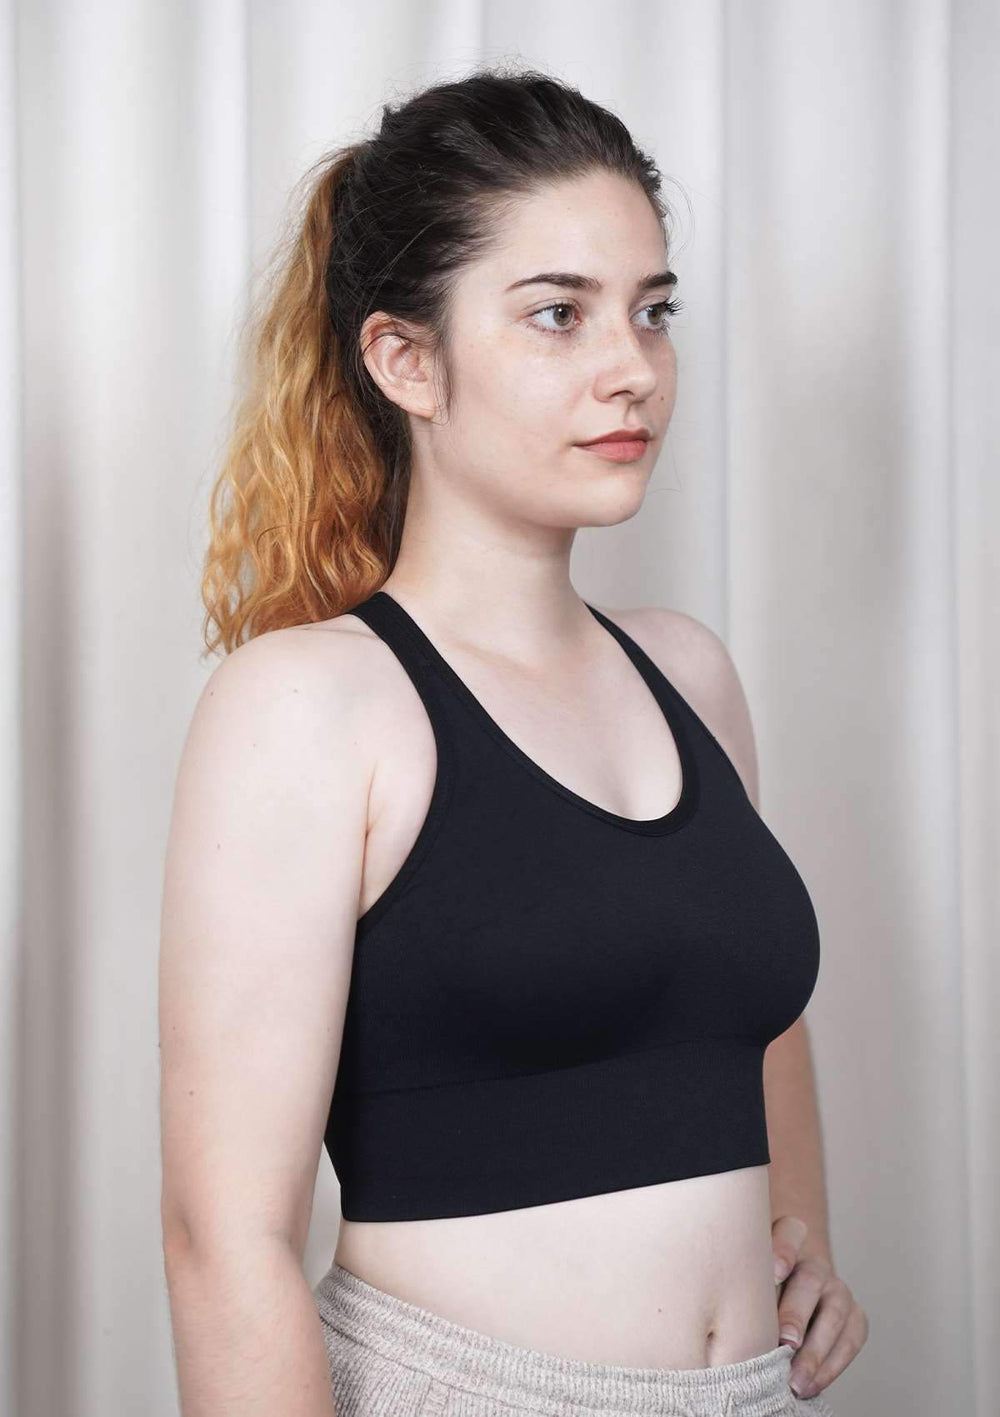 Transform a sports bra into a binder: THE TUTORIAL